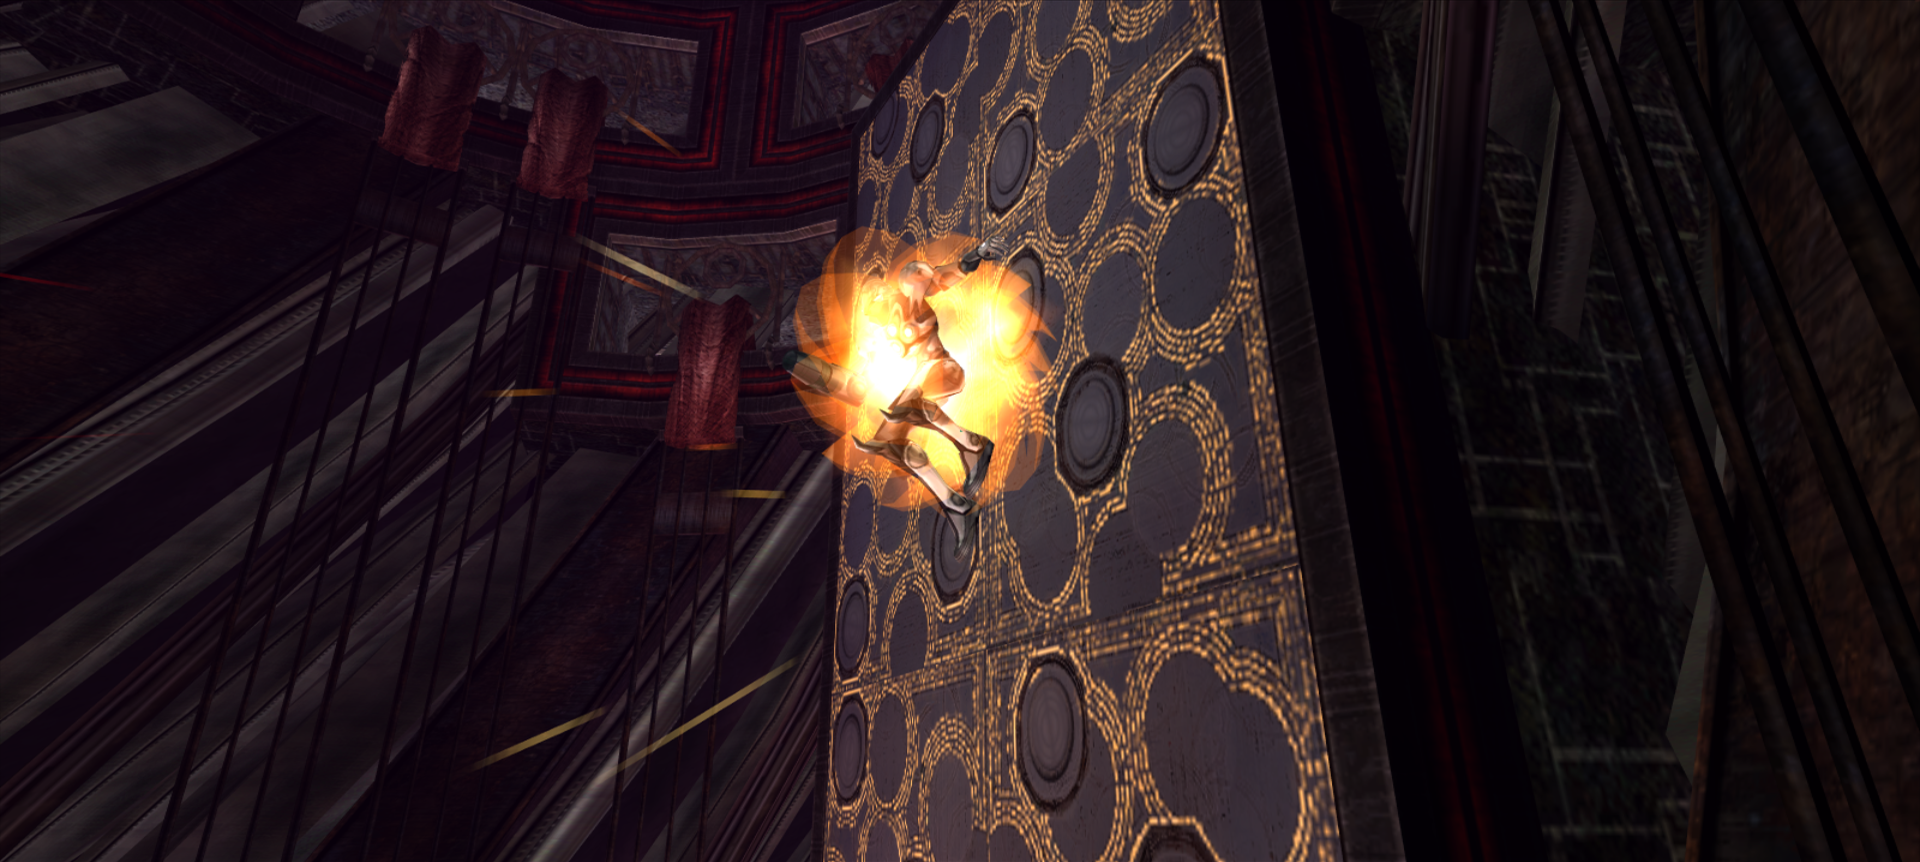 Prime 2的Screw Attack。可以看到视角暂时变成了外部，并且可以在图中这种特定墙面发动踢墙跳